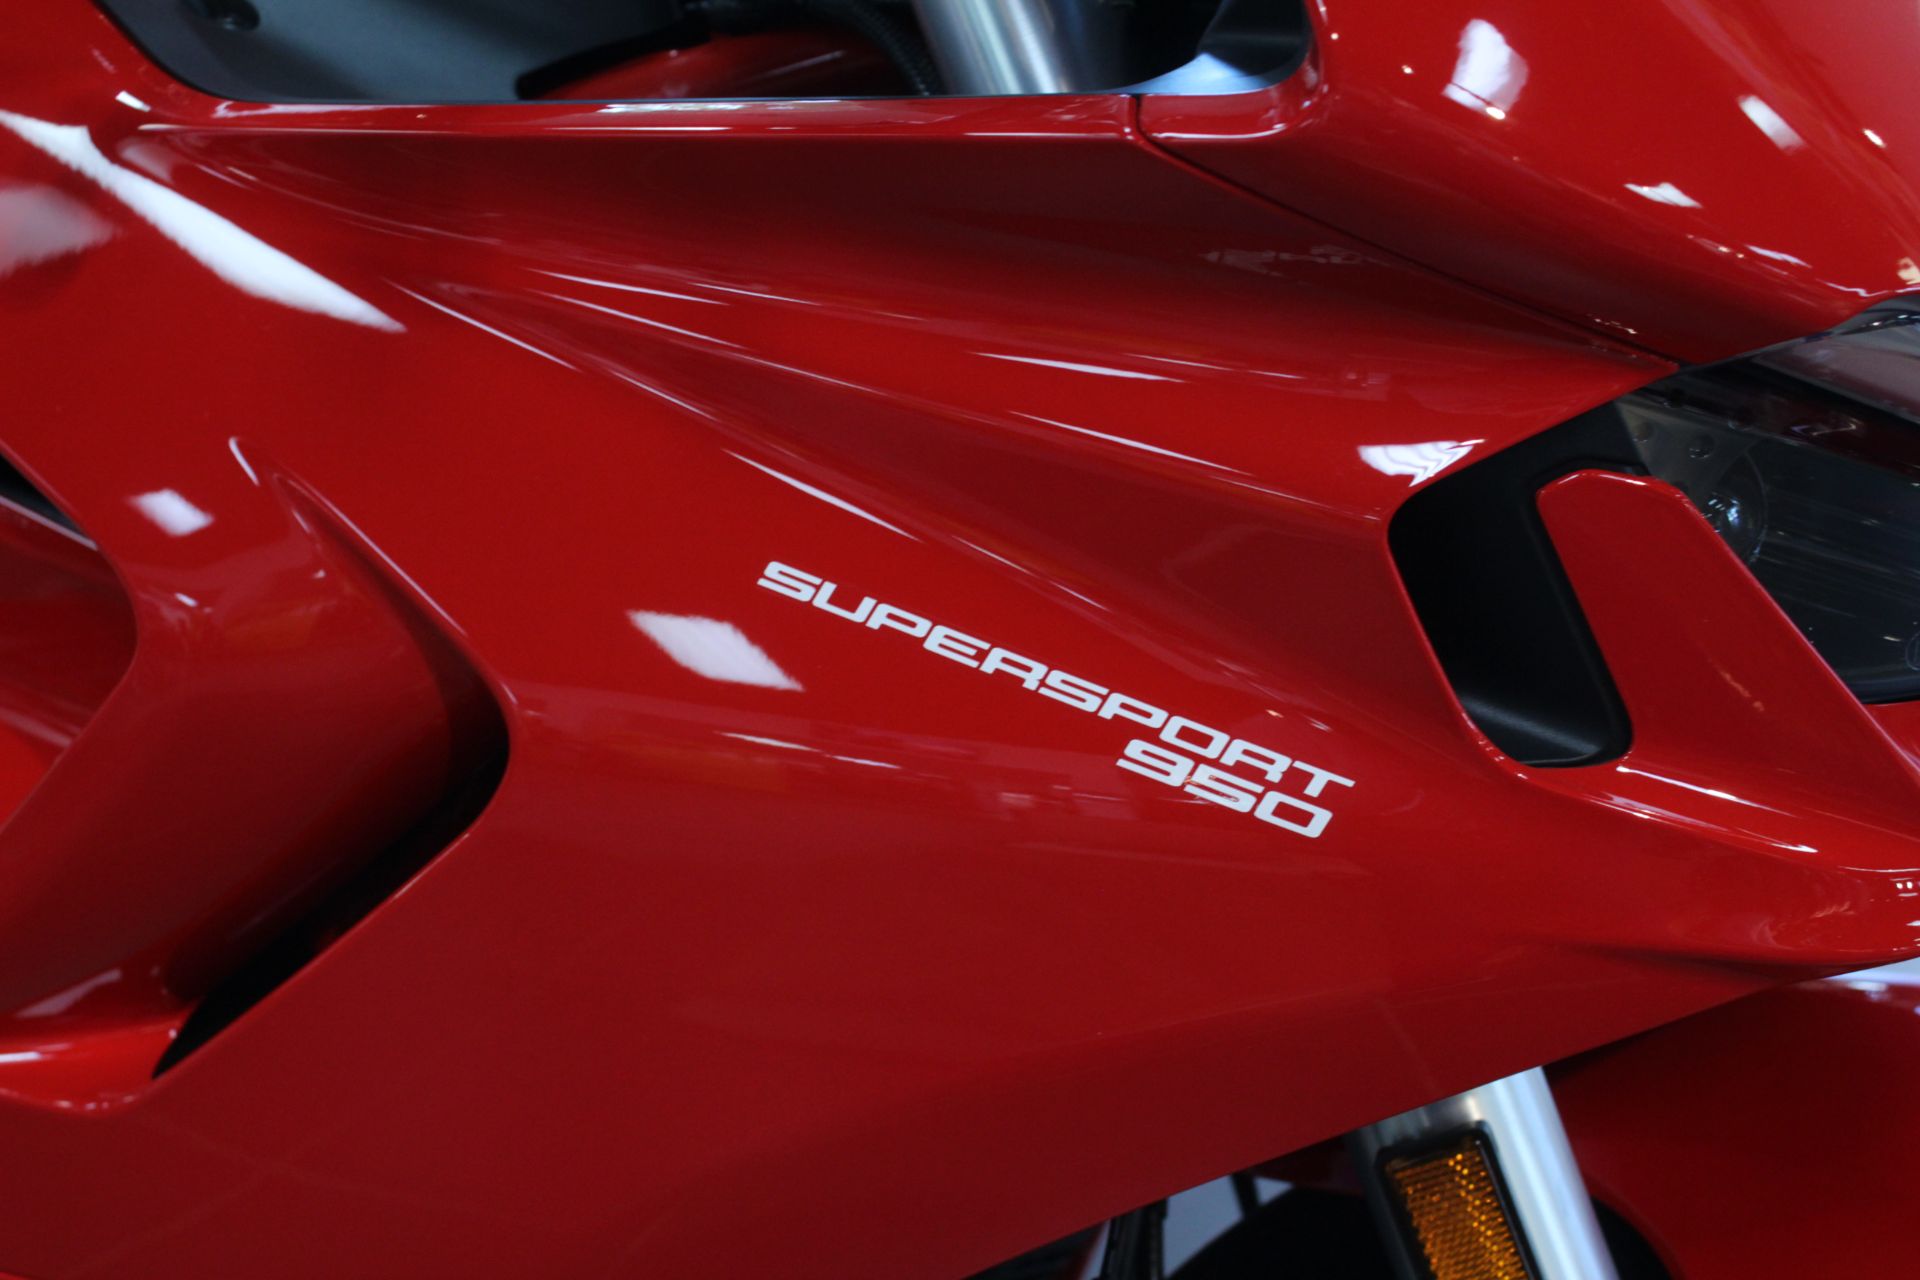 2023 Ducati SuperSport 950 in West Allis, Wisconsin - Photo 4